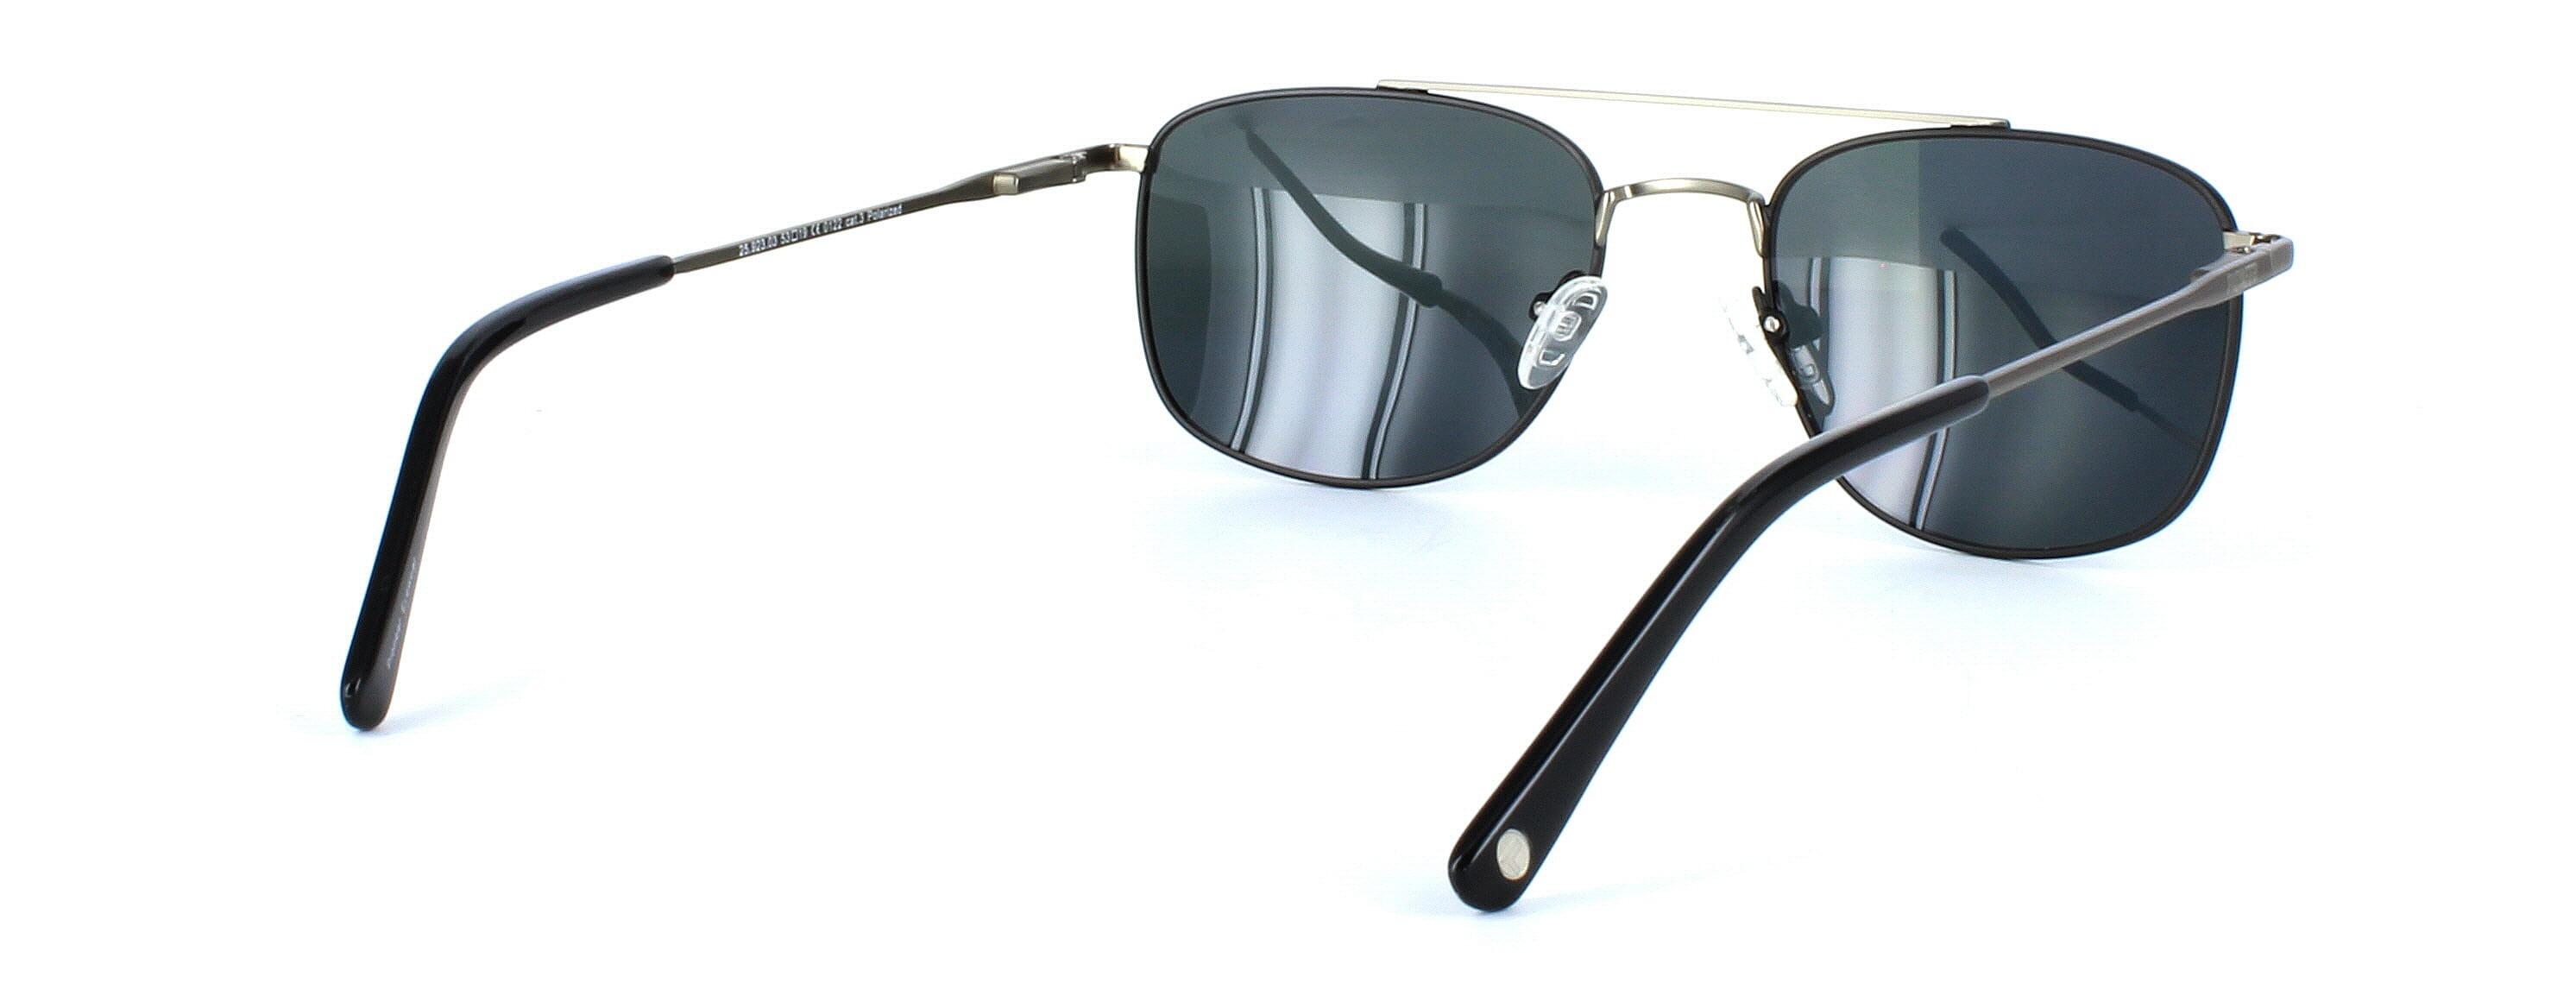 Carlo - Unisex 2-tone aviator style sunglasses here in black and gunmetal - image view 2